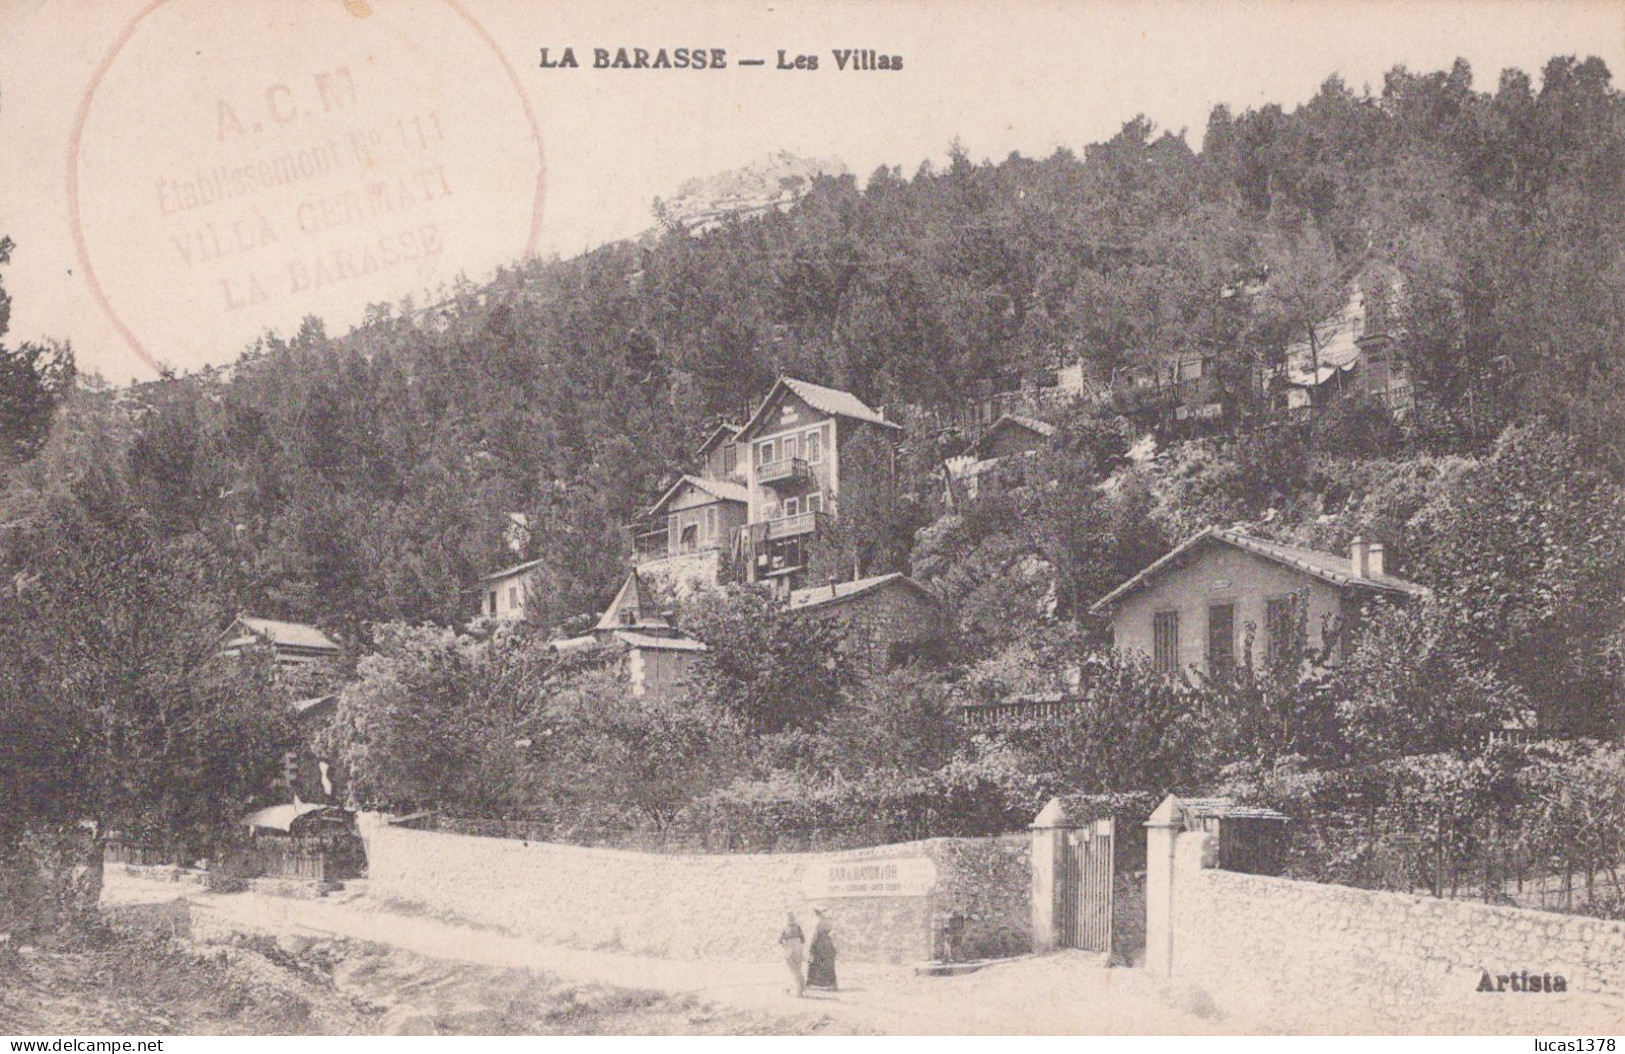 13 / MARSEILLE / LA BARASSE / LES VILLAS / VILLA GERMATI - Saint Marcel, La Barasse, St Menet